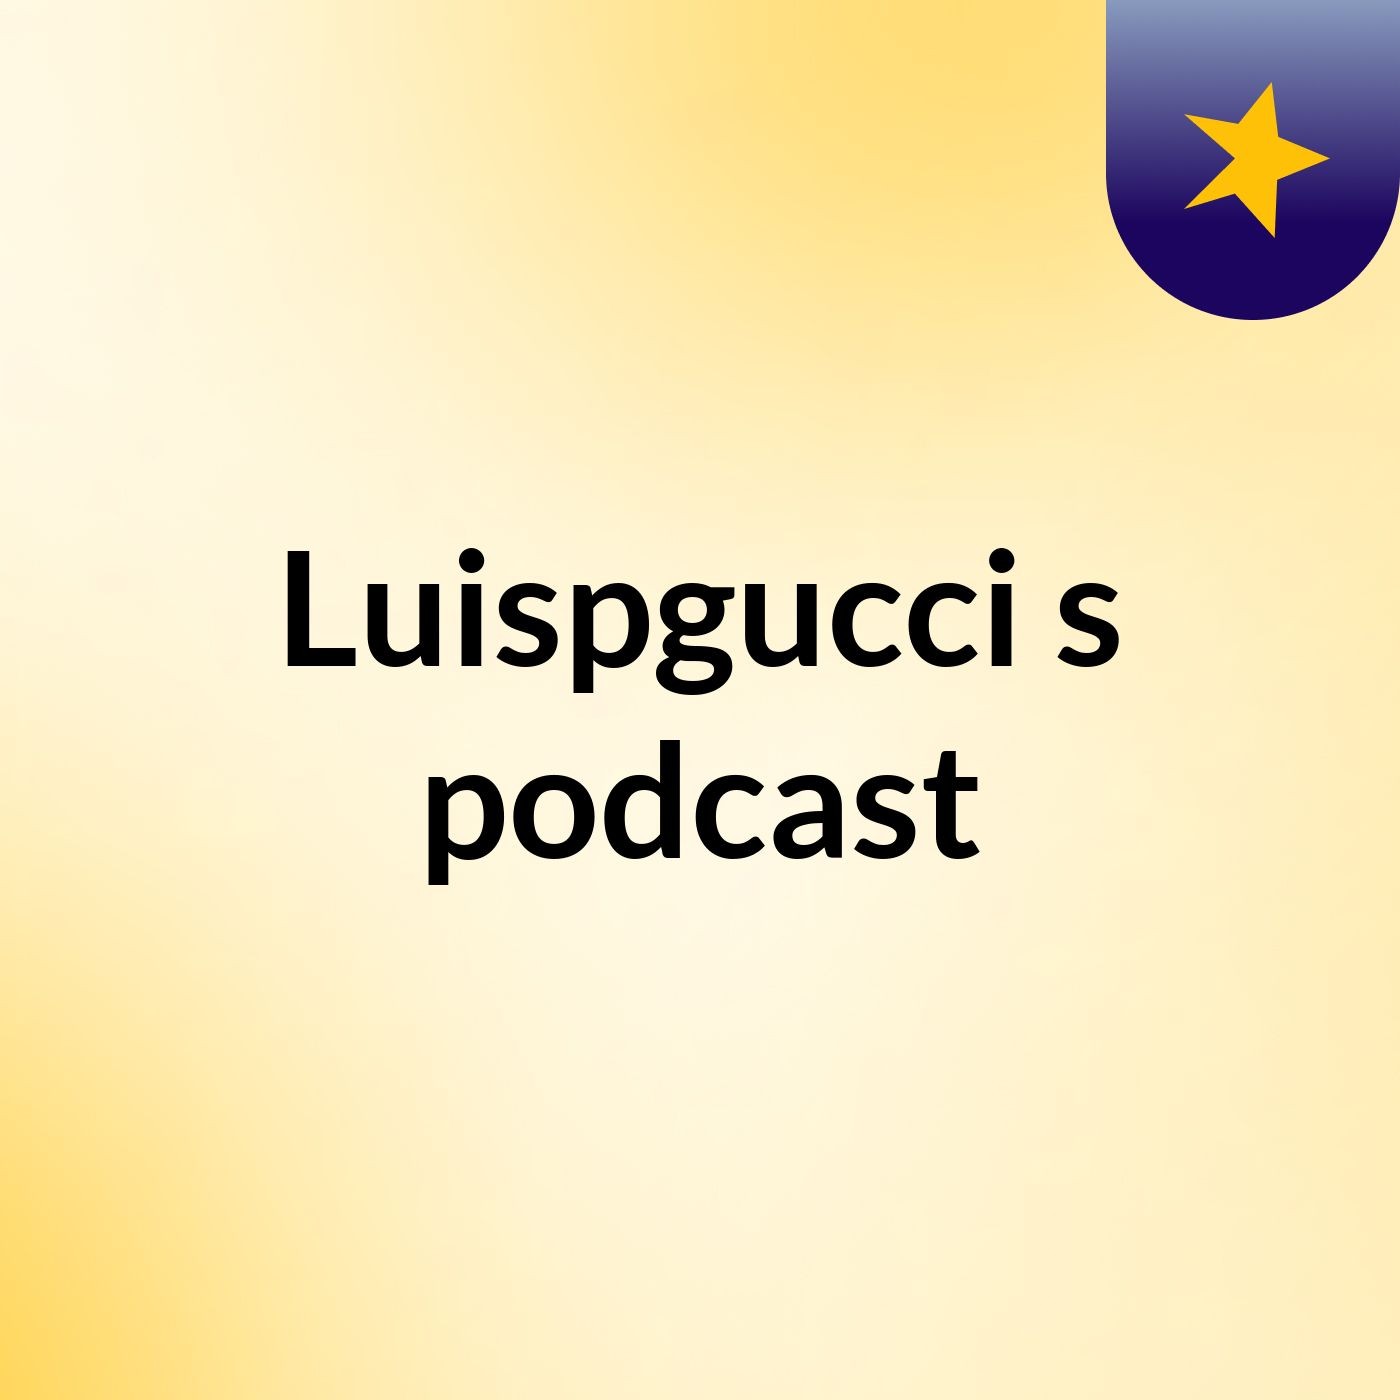 Episode 2 - Luispgucci's podcast